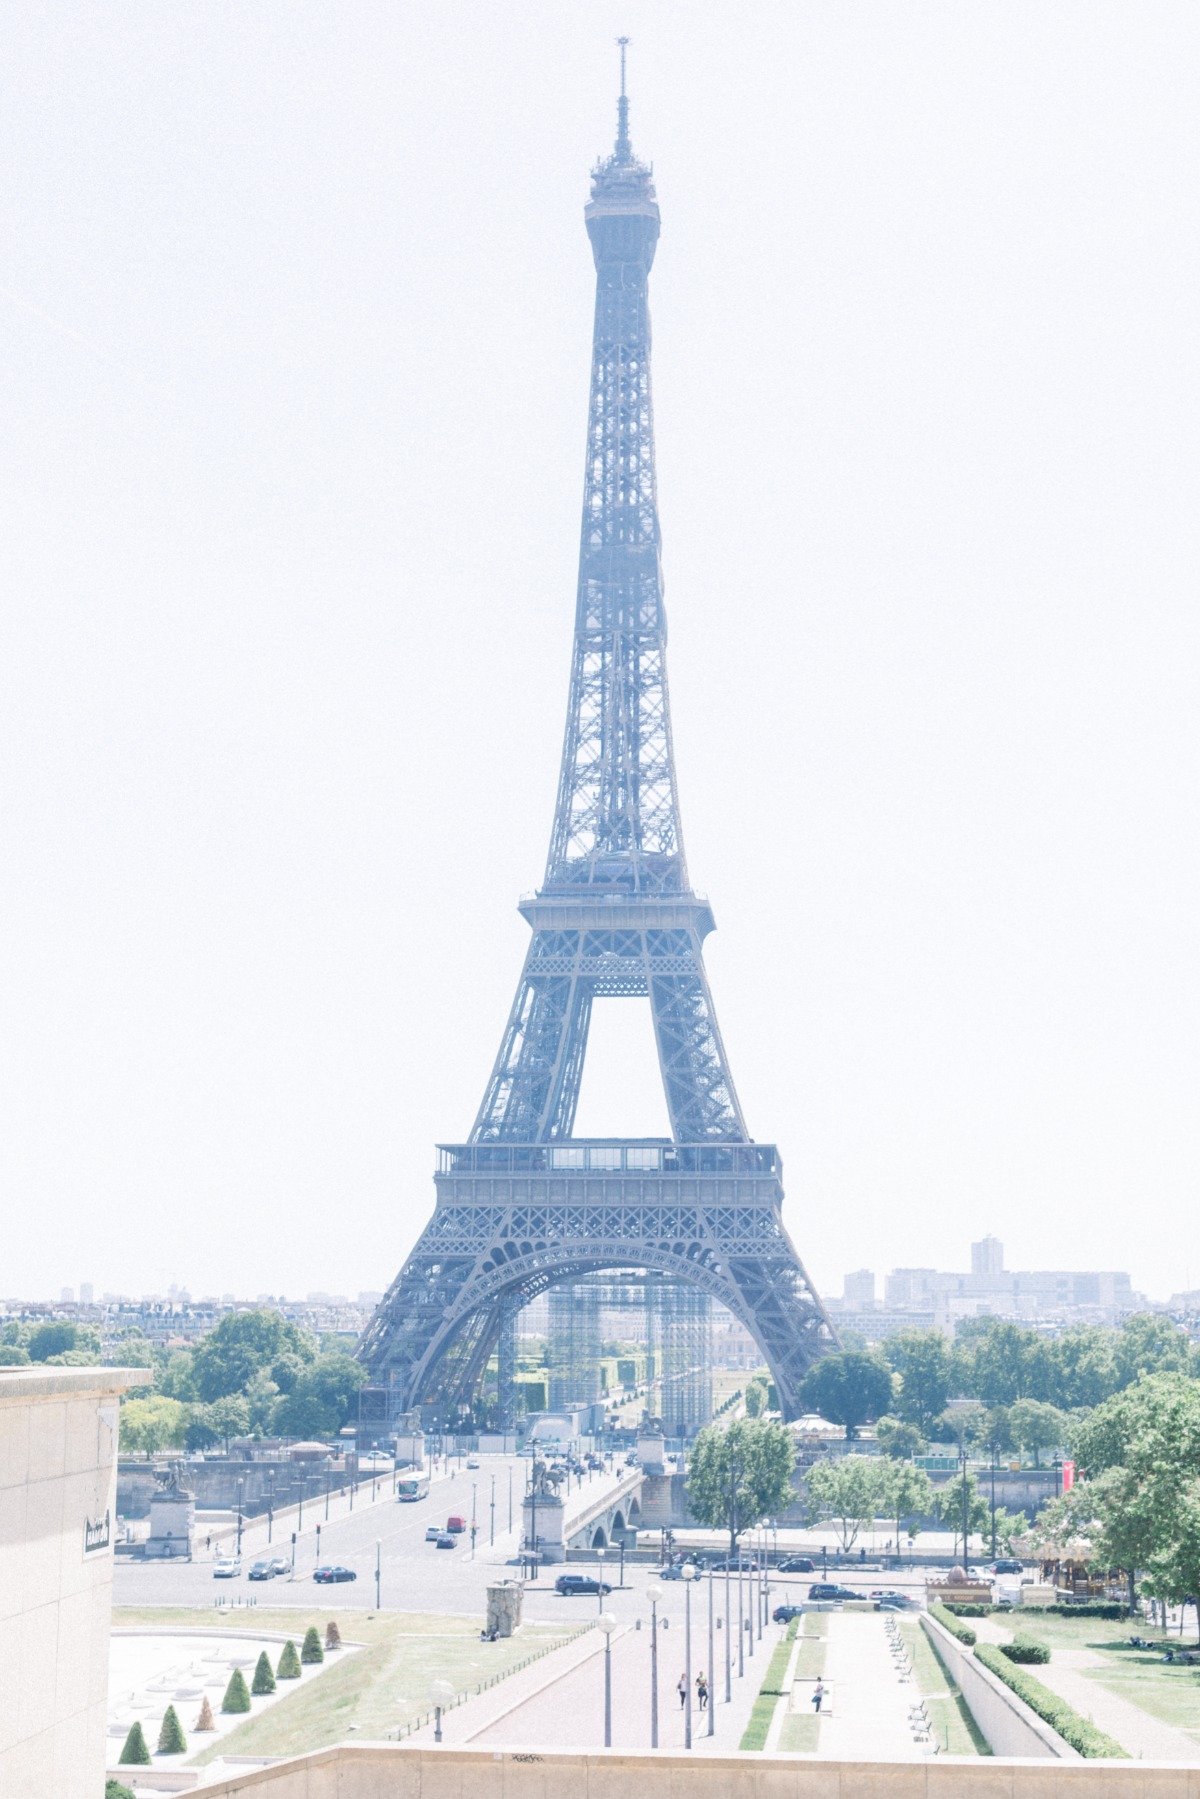 Photograph of Paris